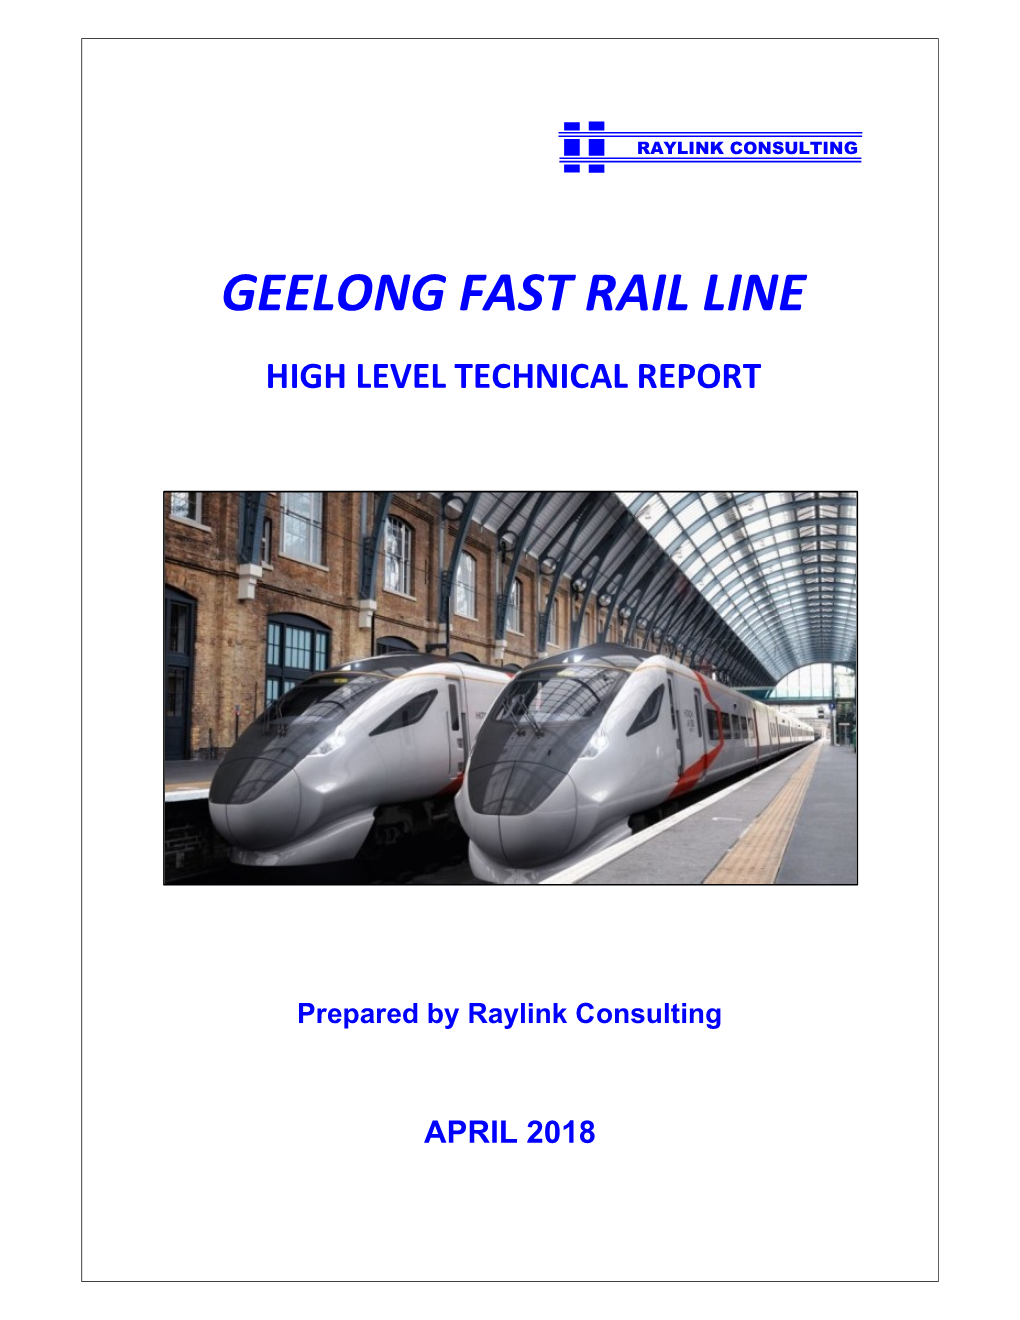 Geelong Fast Rail Line